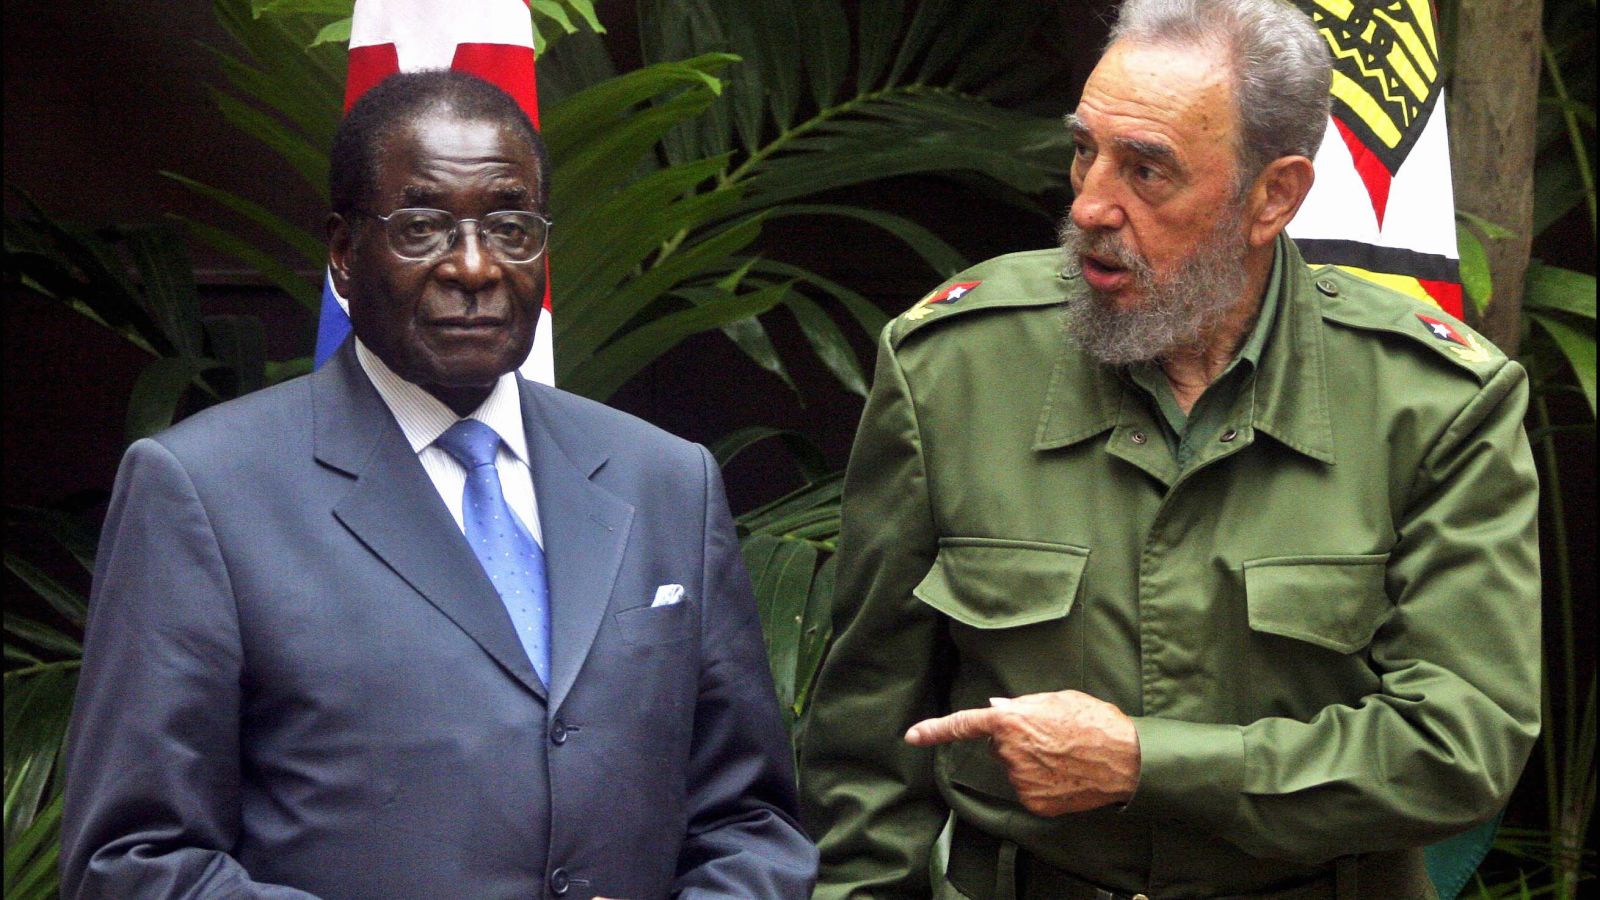 Mugabe and Cuban President Fidel Castro are seen in Havana, Cuba, in September 2005.